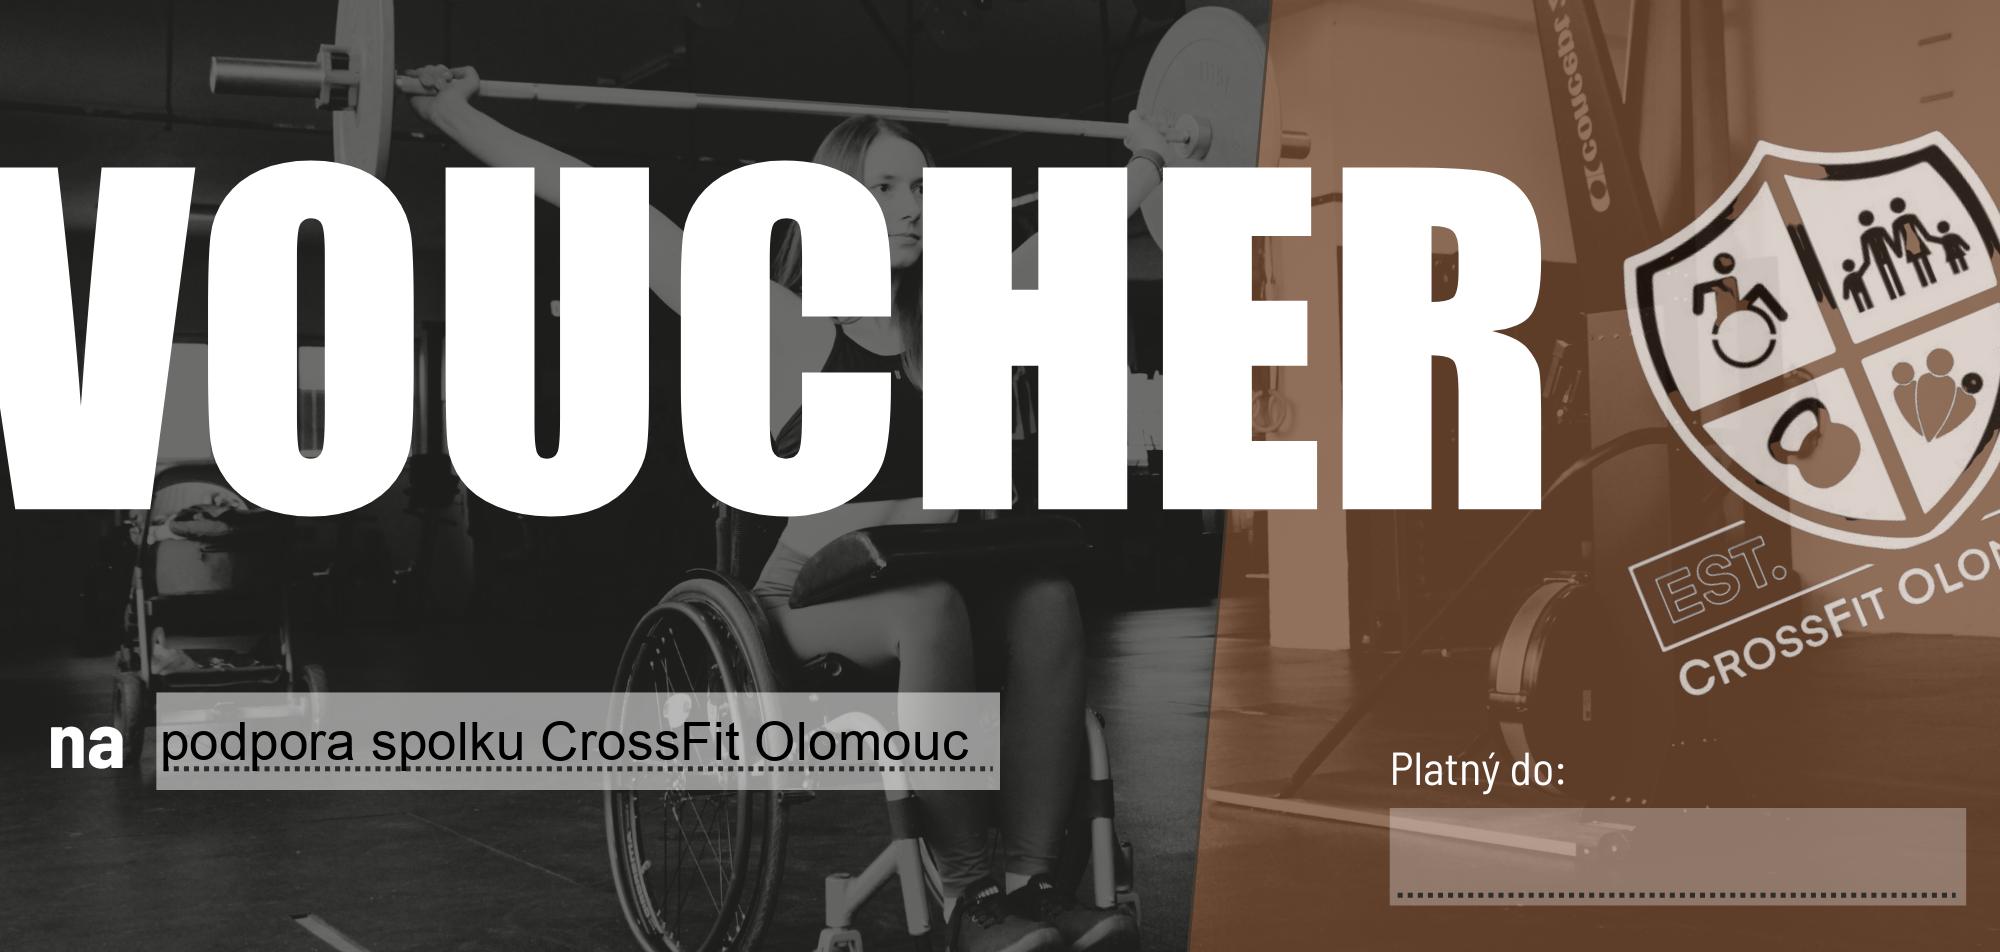 Voucher podpora spolku CrossFit Olomouc